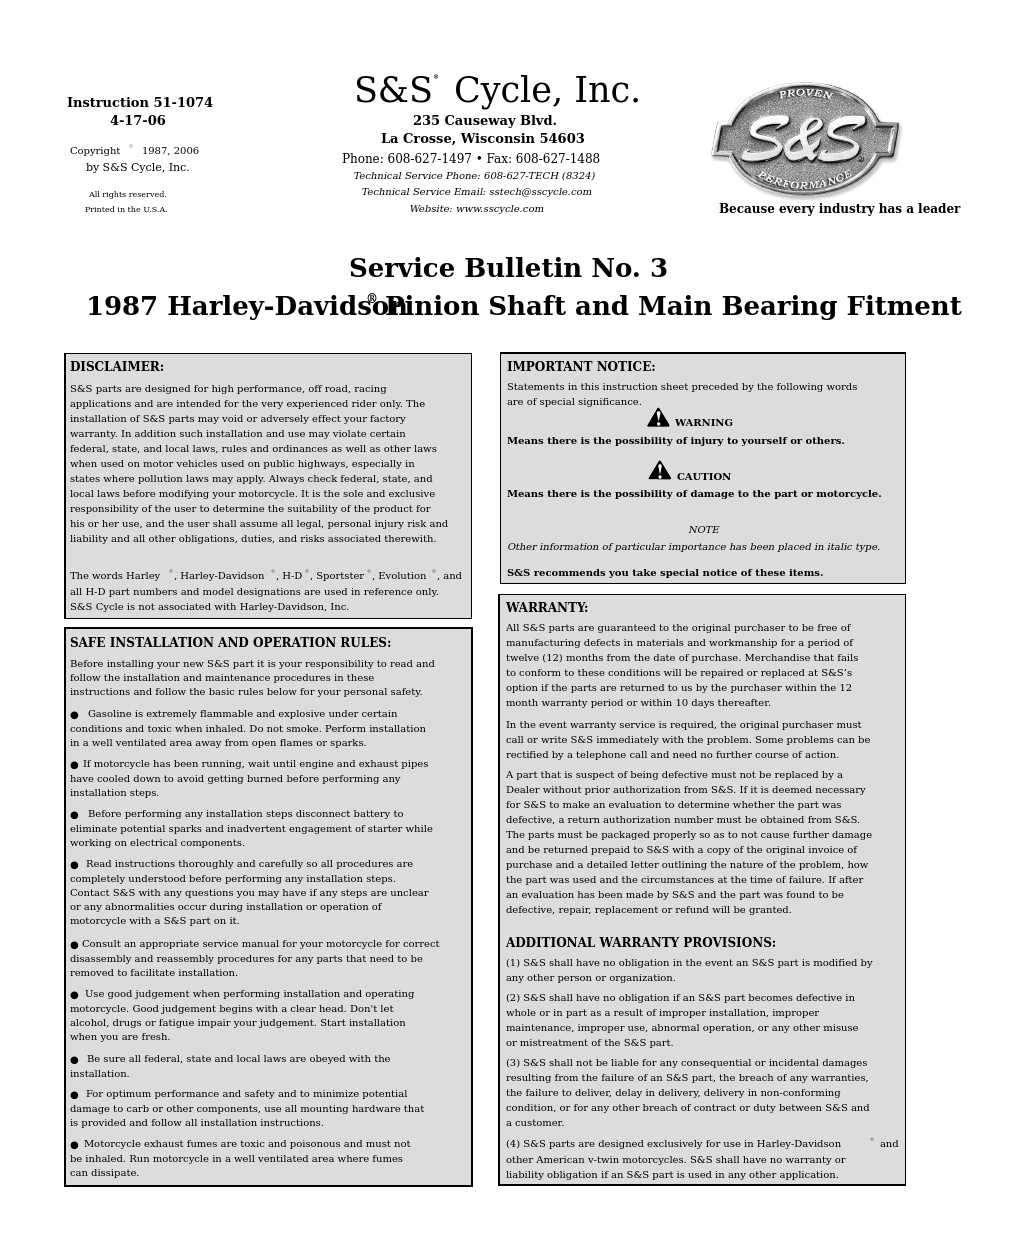 Harley-Davidson 1987 Pinion Shaft and Main Bearing Fitment